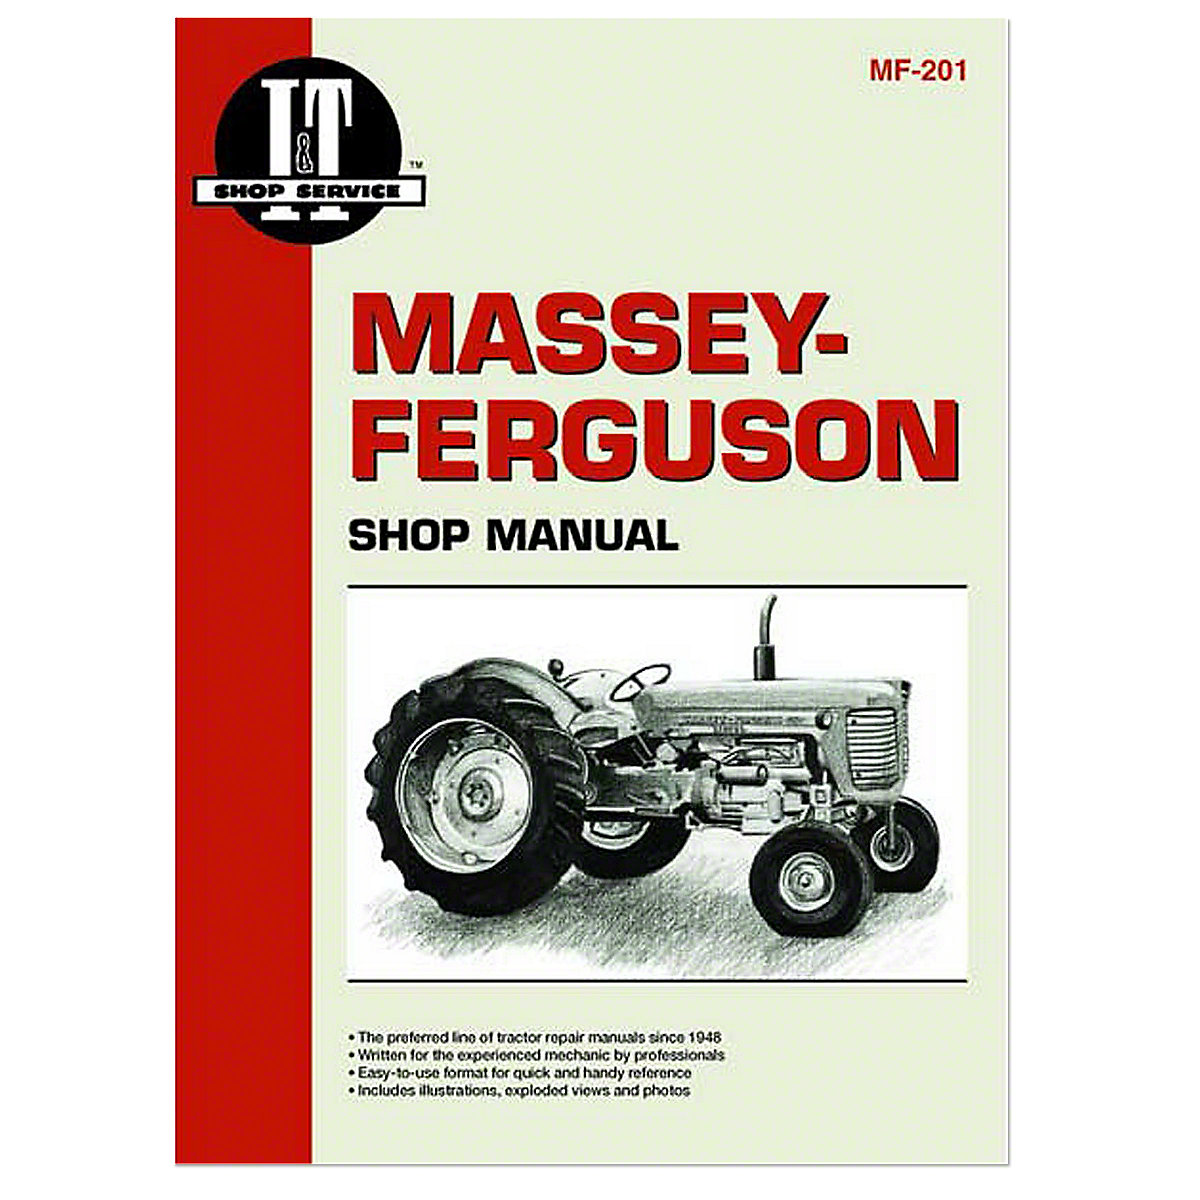 I&T Shop And Service Manual For Massey Ferguson: 1150, 1080, 1085, 1100, 1105, 1130, 1135, 1155, 65, 85, 88, Super 90, Super 90WR. 